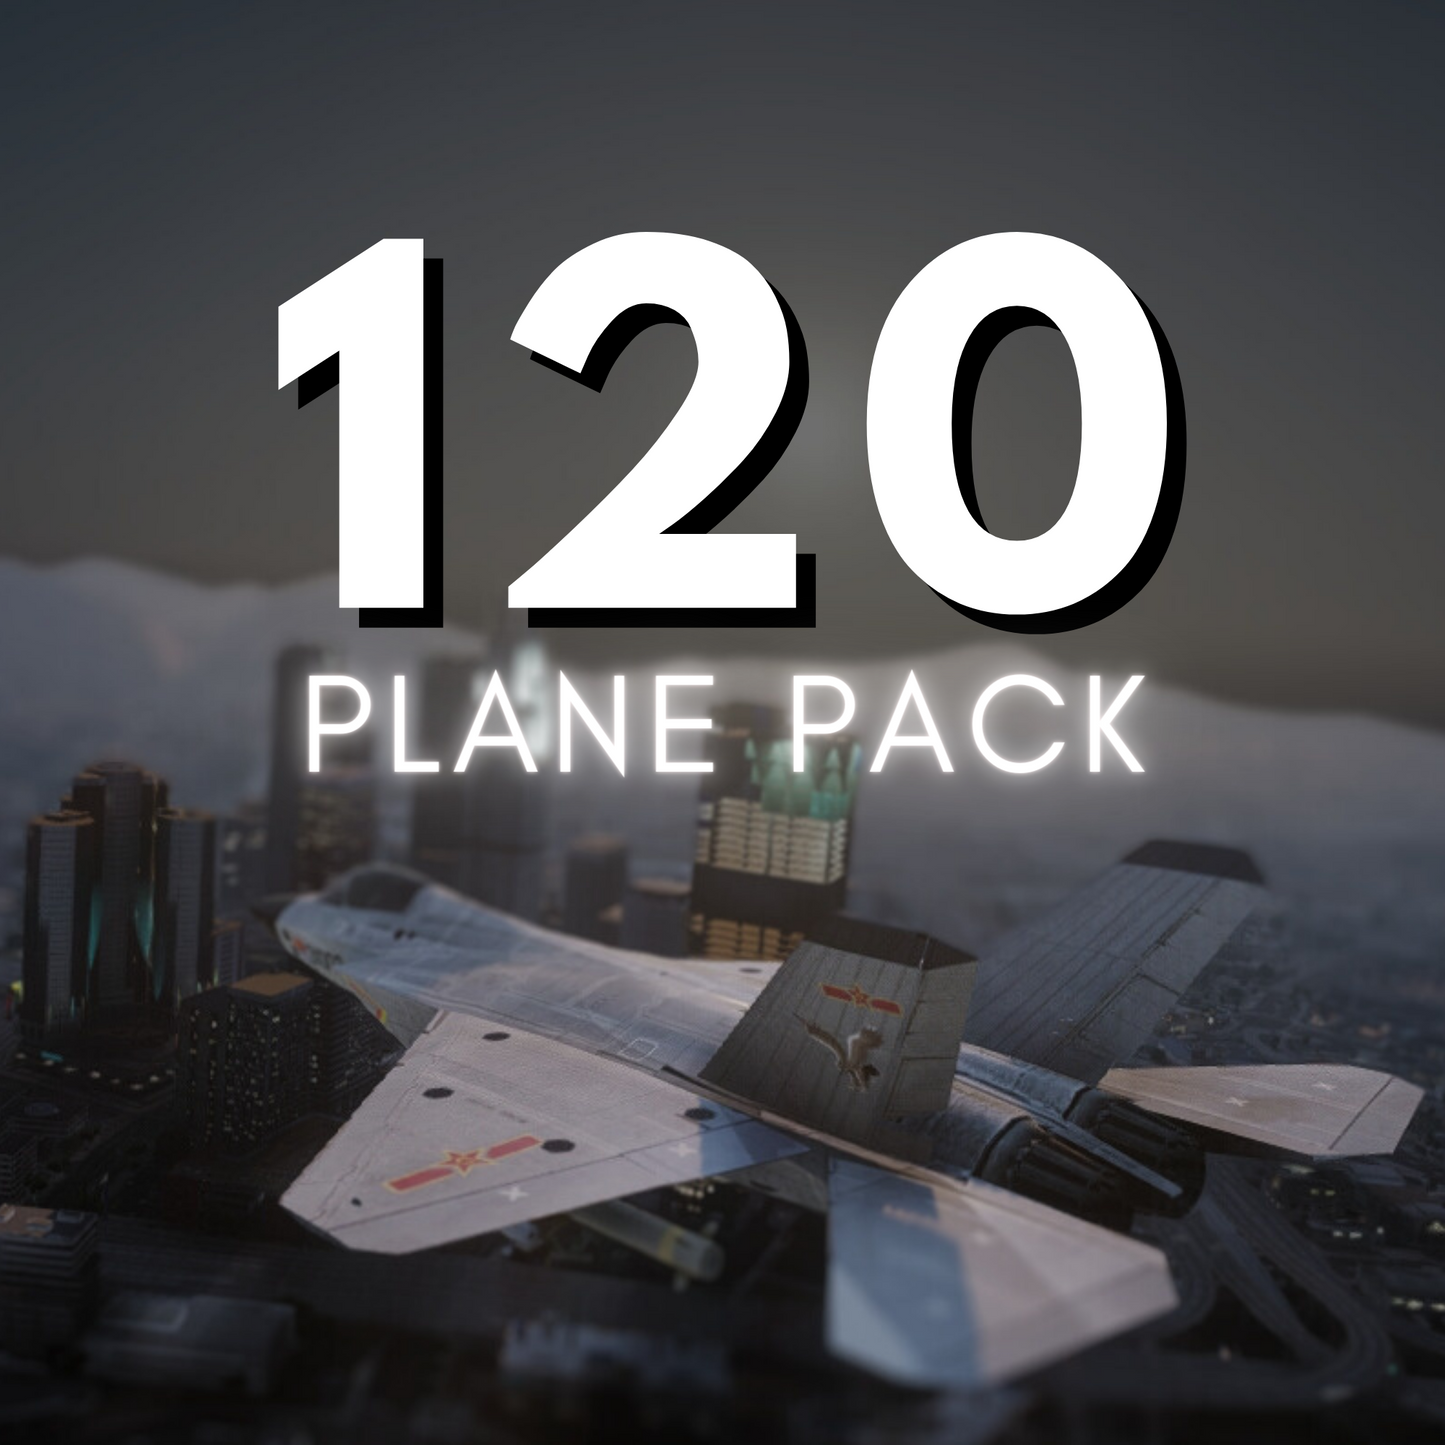 Plane Pack | 120 Planes